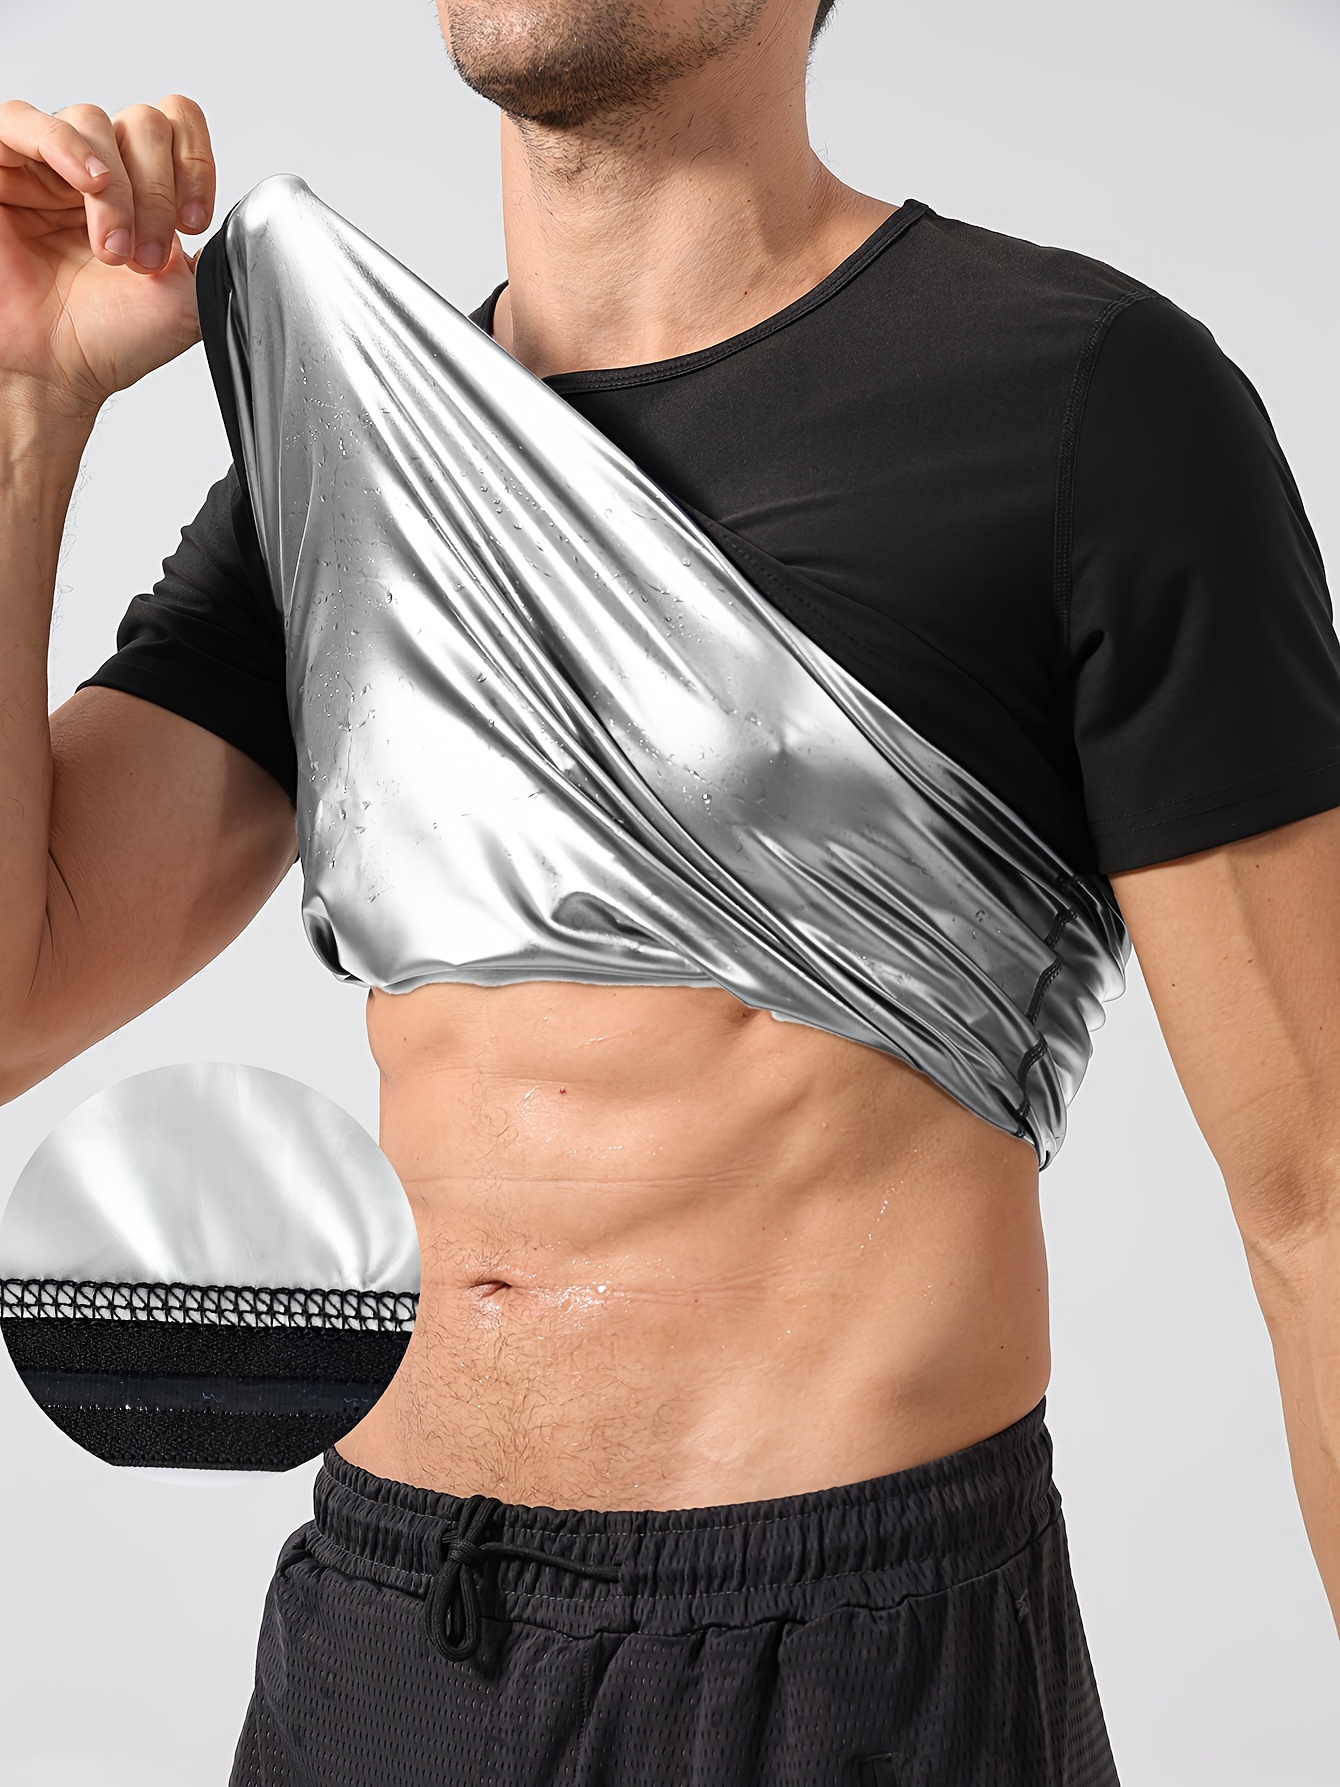 Kutting Weight Men's Neoprene Weight Loss Sauna Shirt Short Sleeve